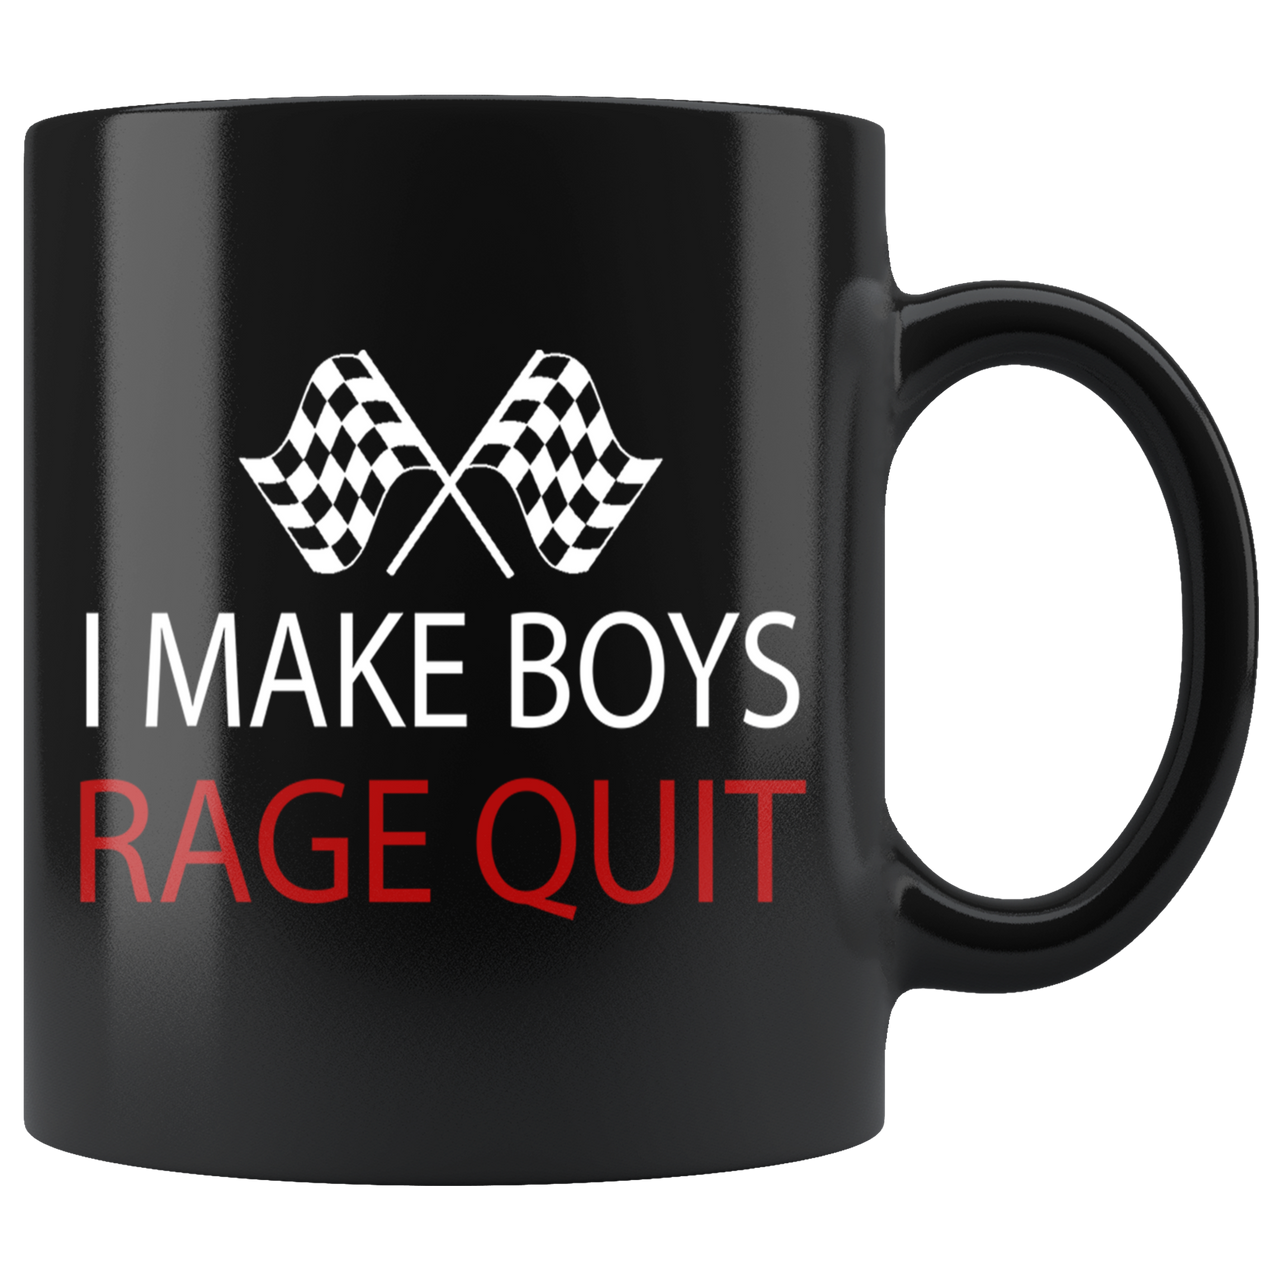 I Make Boys Rage Quit Mug!